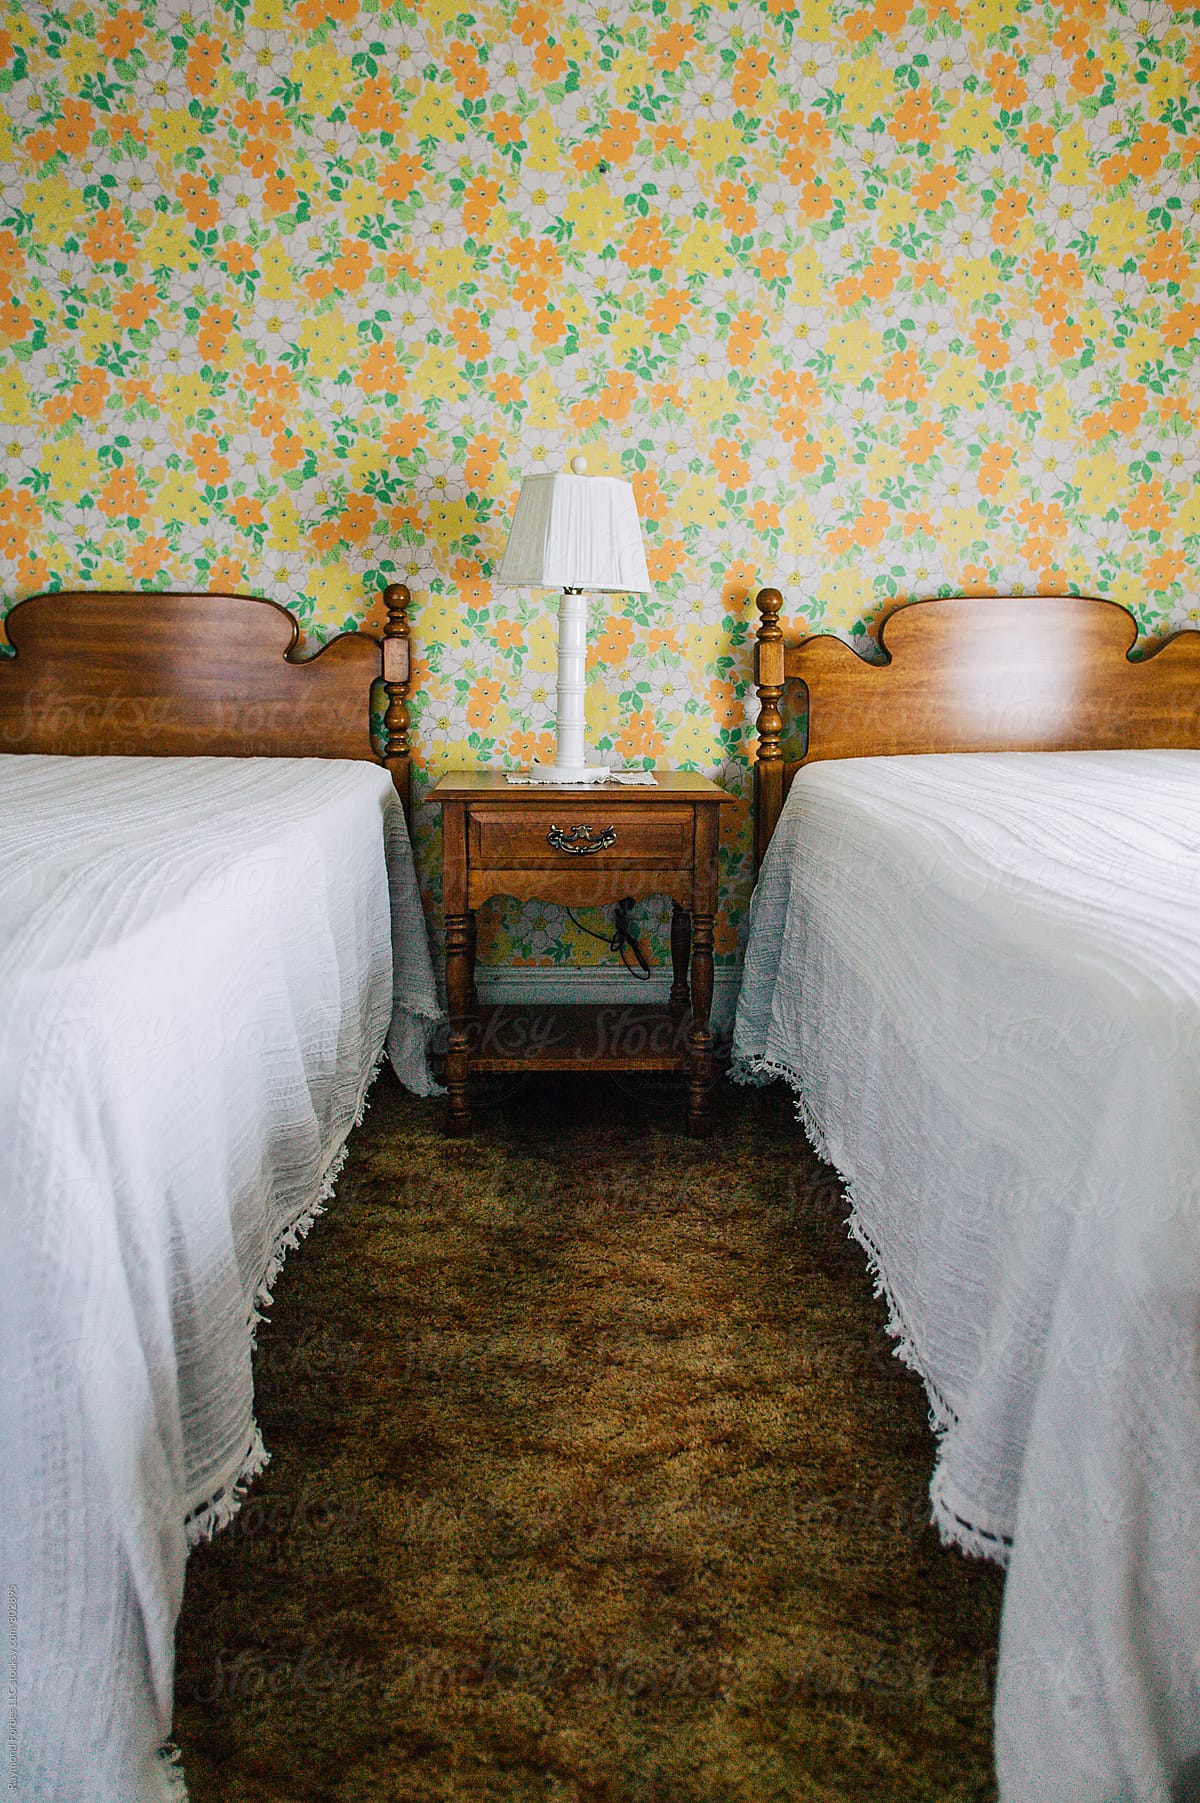 Vintage Outdated Motel Room bed with vintage wallpaper